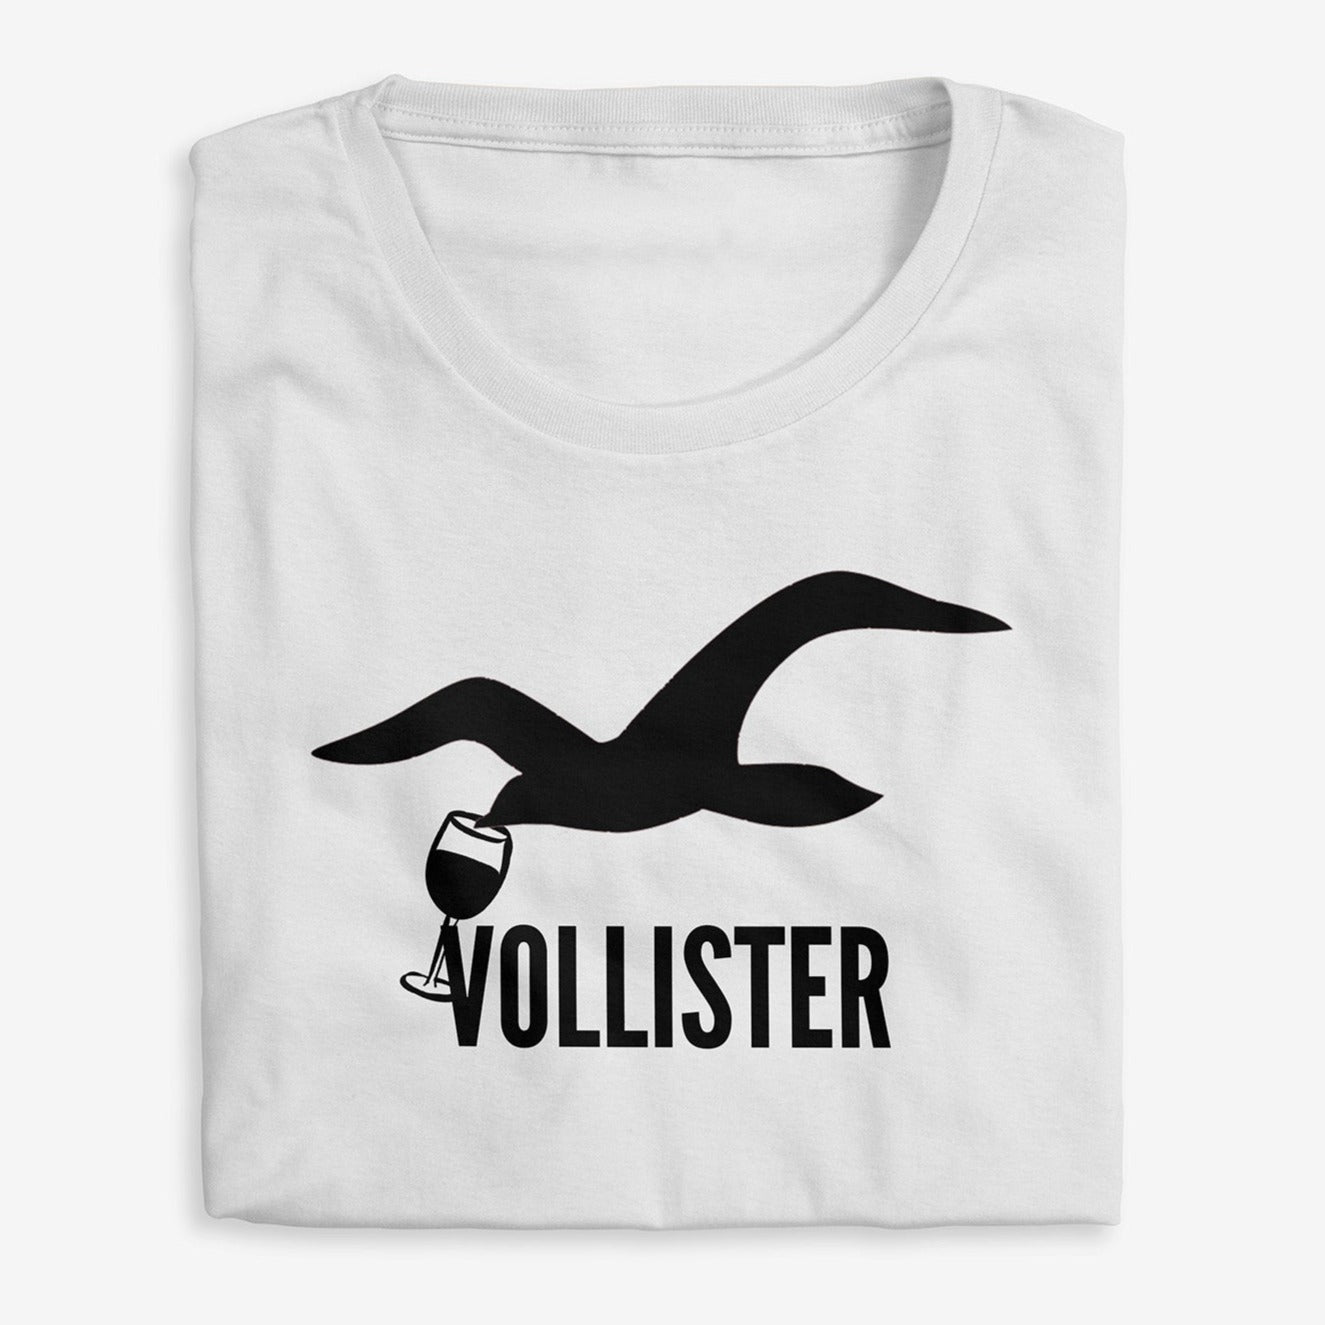 VOLLISTER - T-shirt premium homme